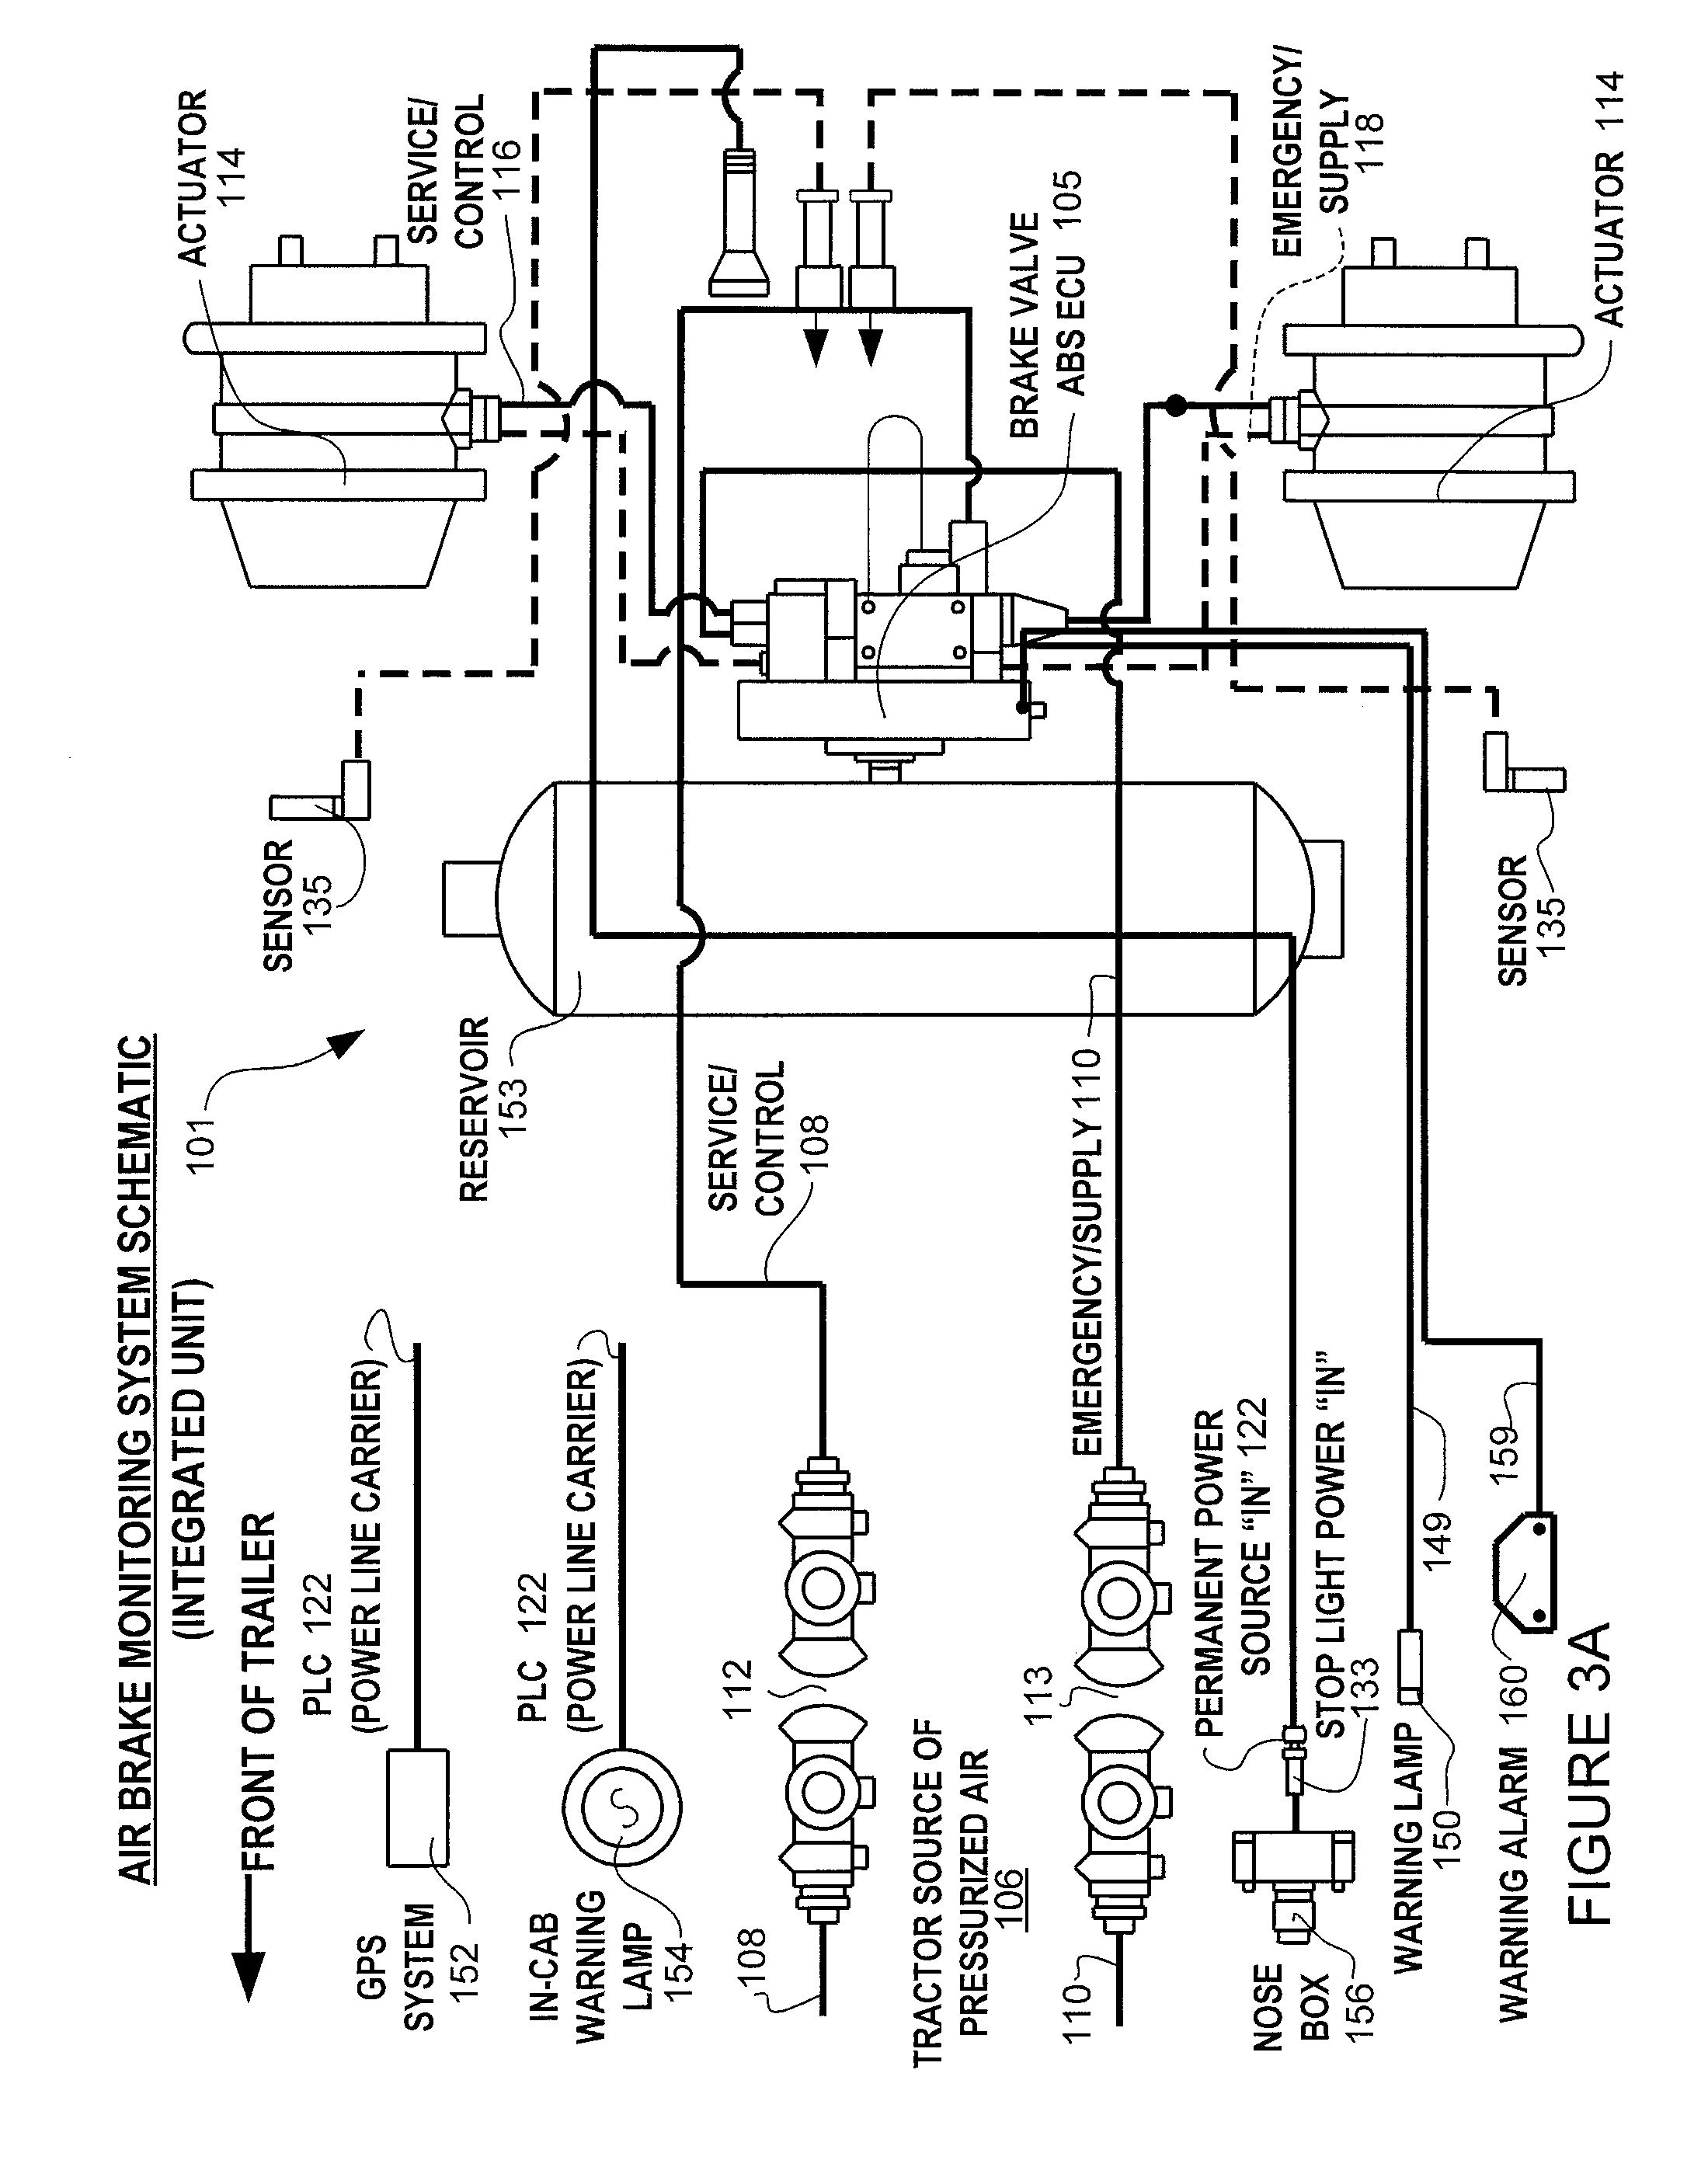 1997 ford F150 4 6 Engine Diagram 2 2000 F450 Abs Wiring Diagram Another Blog About Wiring Diagram • Of 1997 ford F150 4 6 Engine Diagram 2